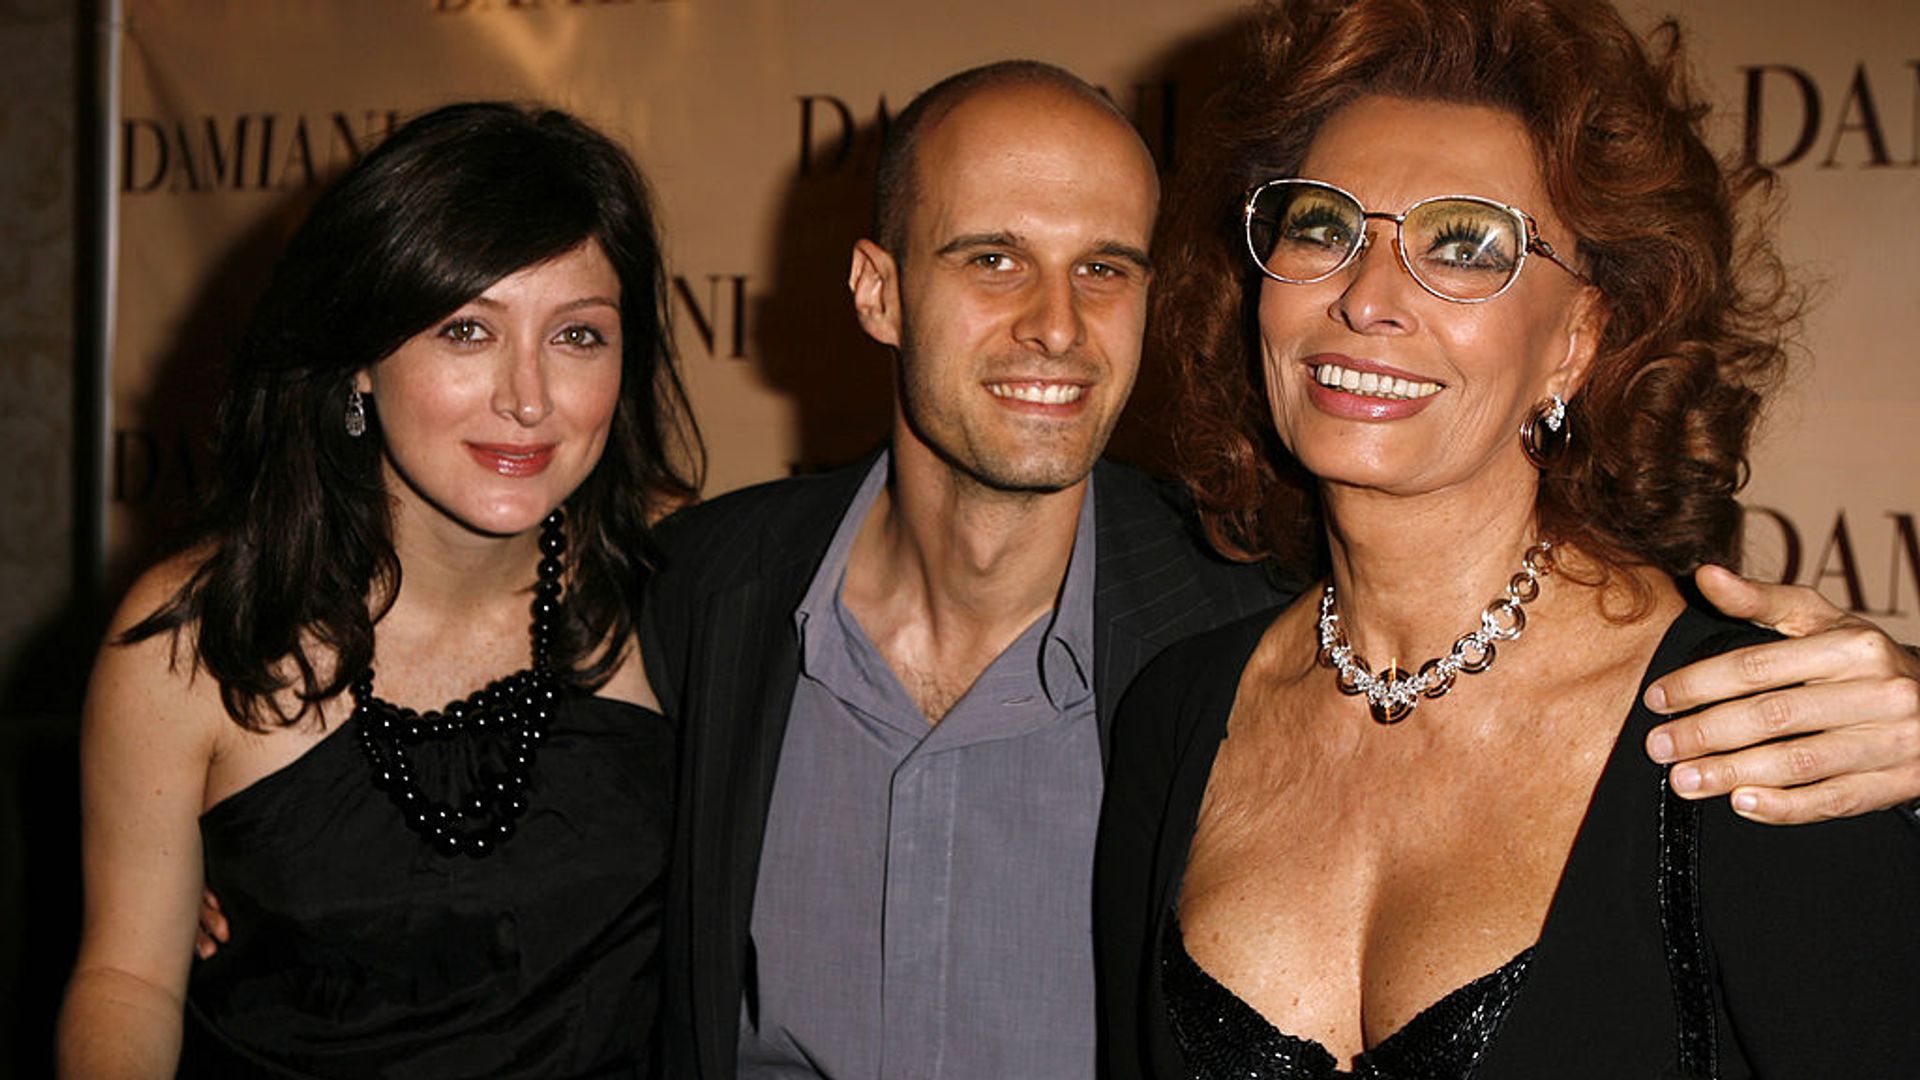 Sasha Alexander, Edoardo Ponti and Sophia Loren during Damiani Launches The "Sophia Loren" Collection at Four Seasons Hotel in Beverly Hills, CA, United States. 